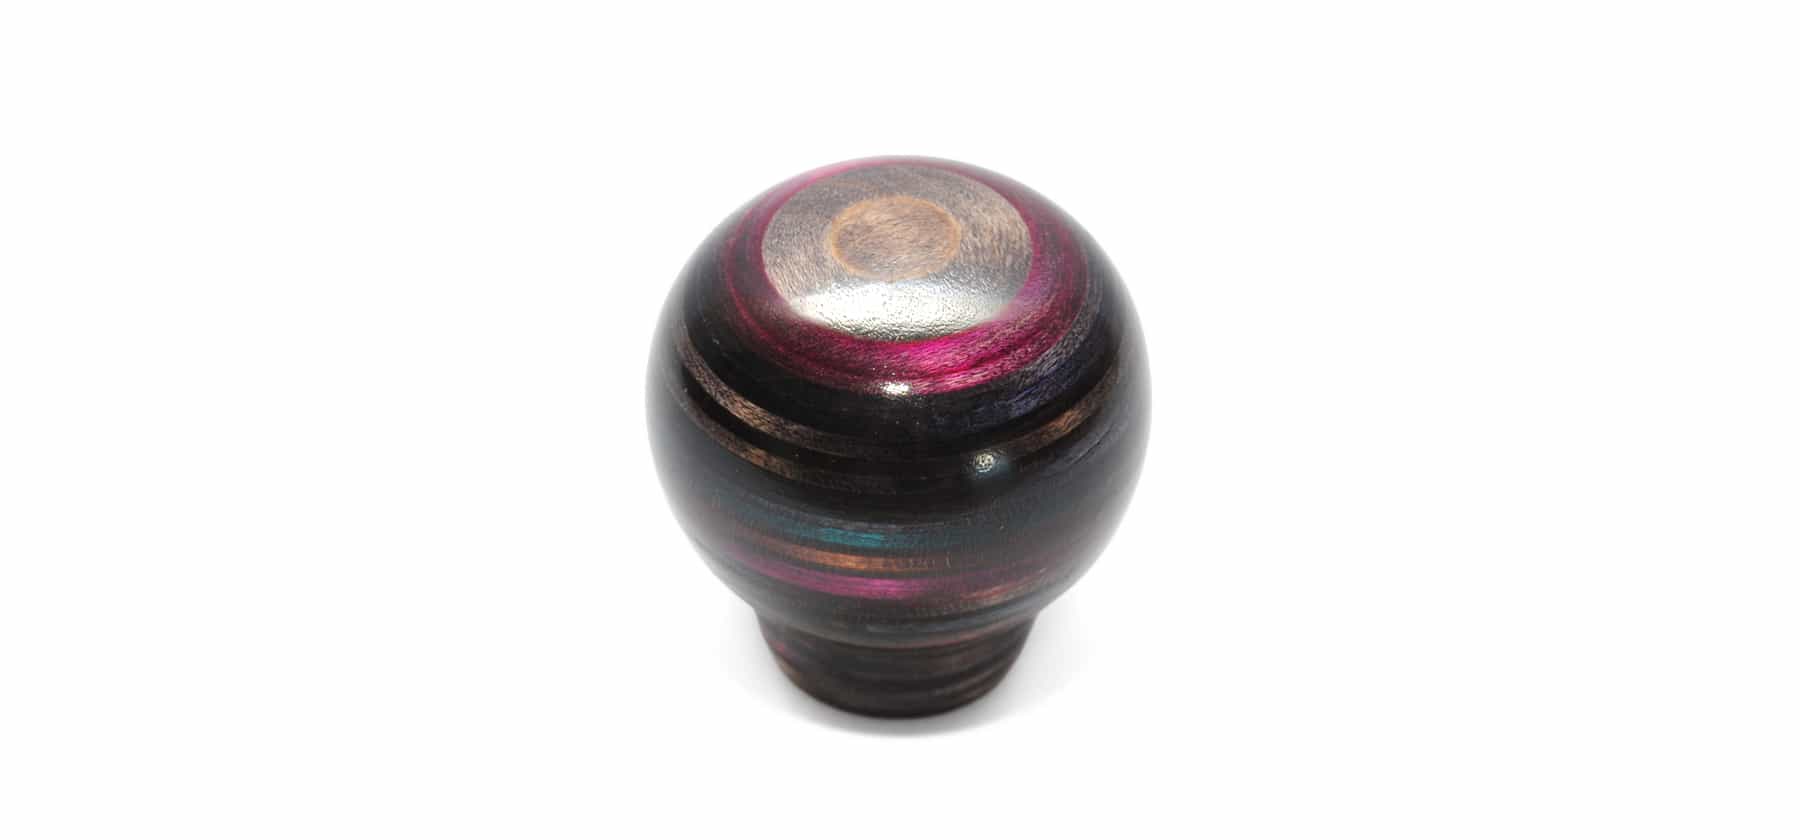 Teardrop shift knob with black oil